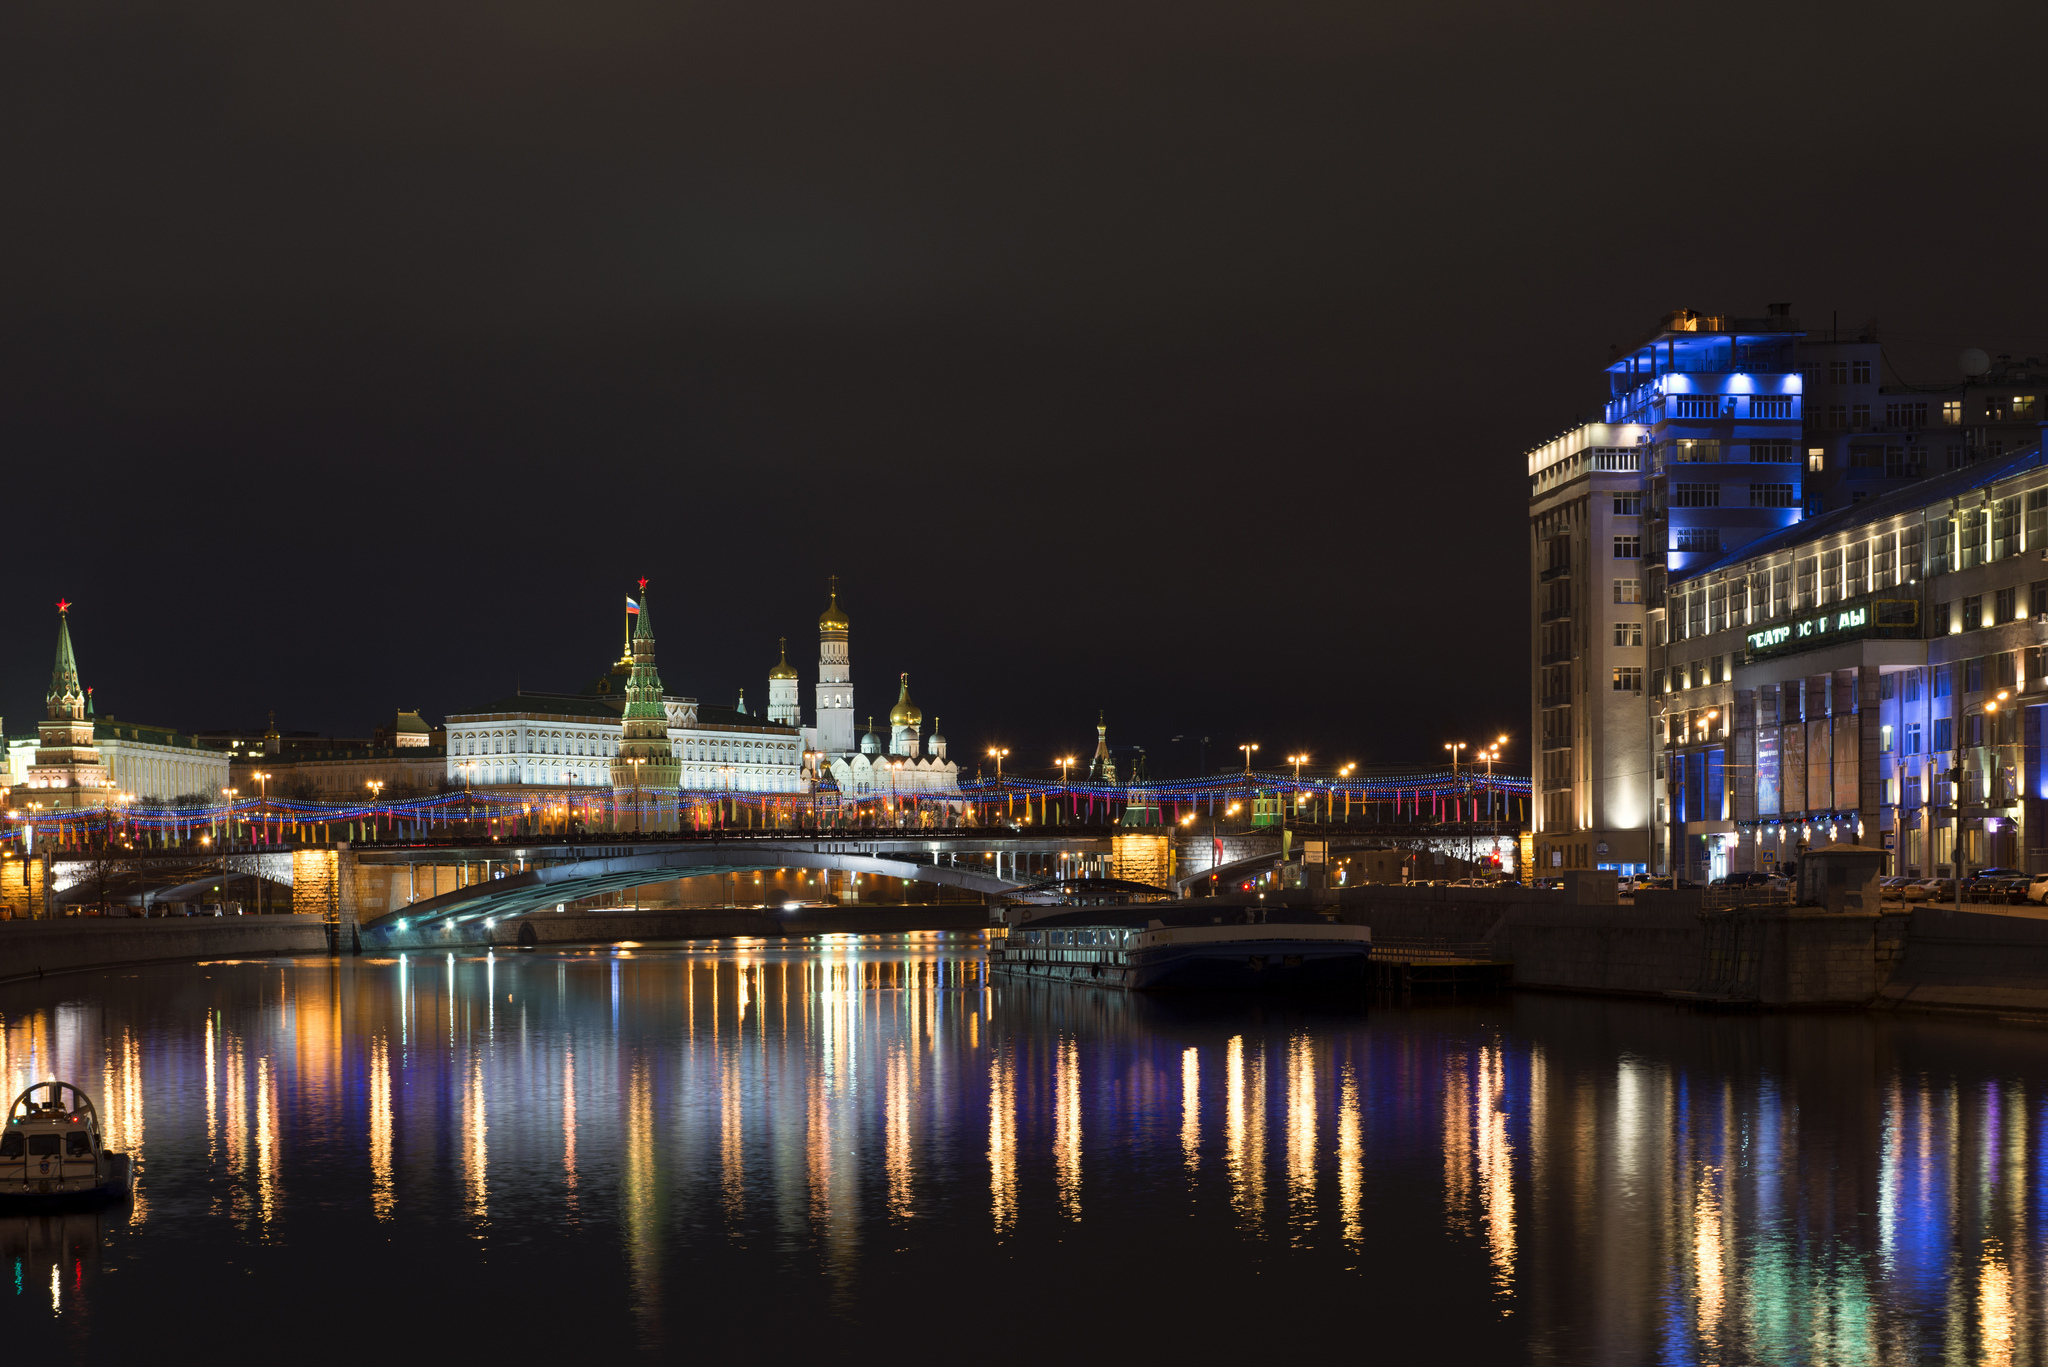 Почему 7 вечер. Москоу Сити река Москва. Москва река Москва Сити ночью. Ночная Москва-река вид с теплохода.